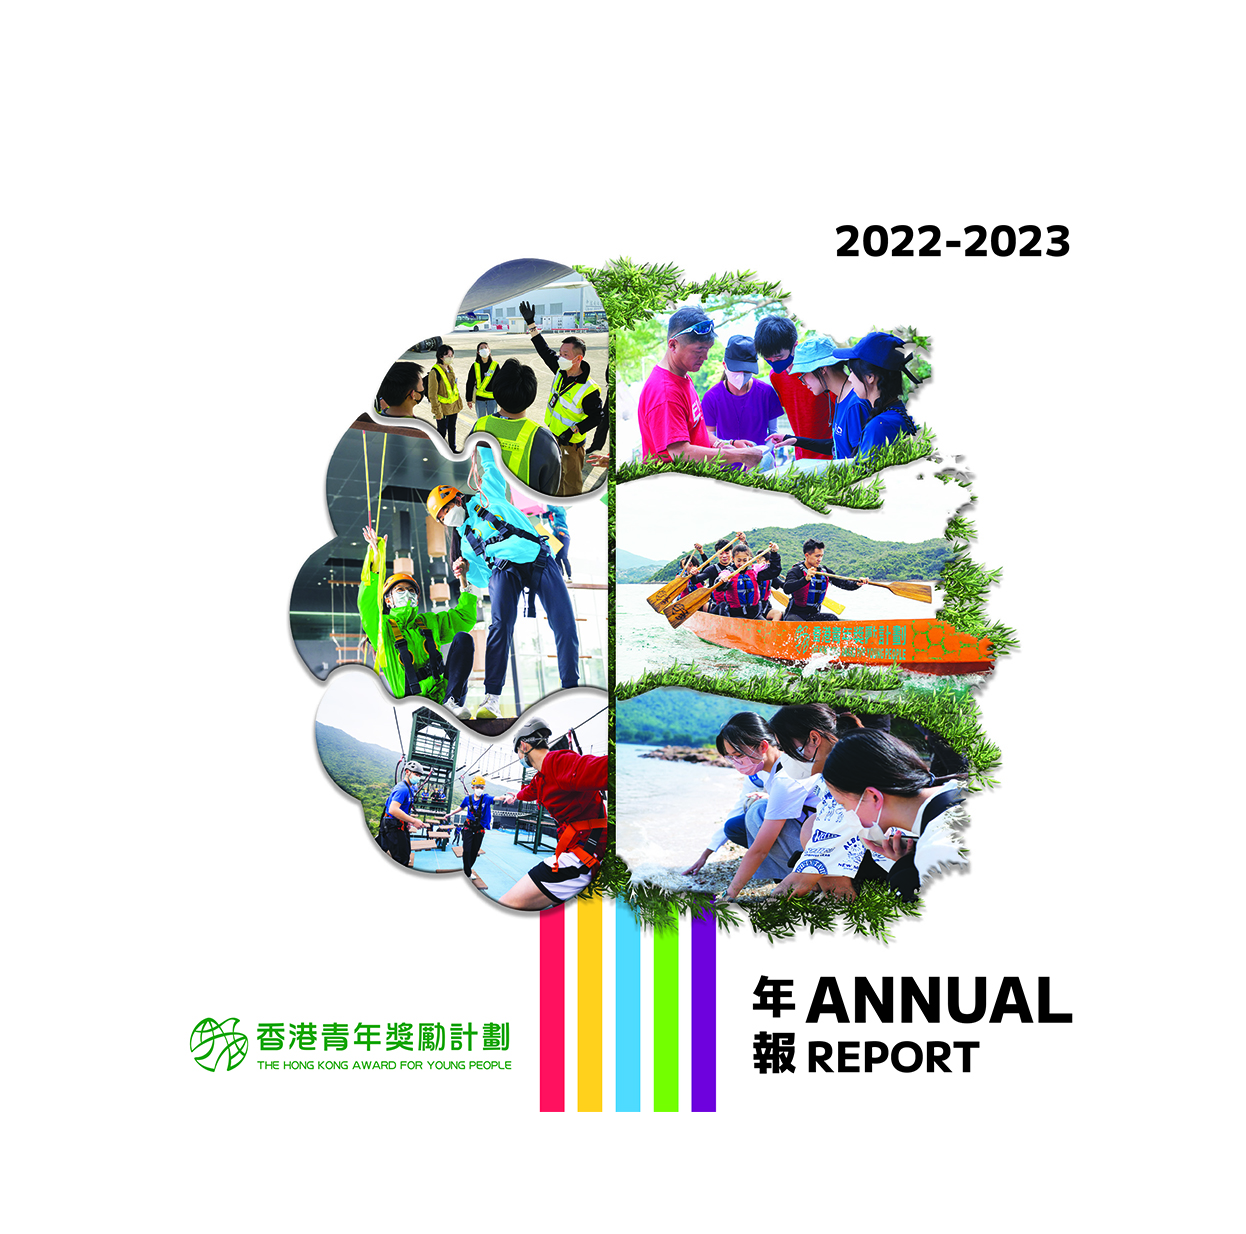 Annual Report 2022/2023